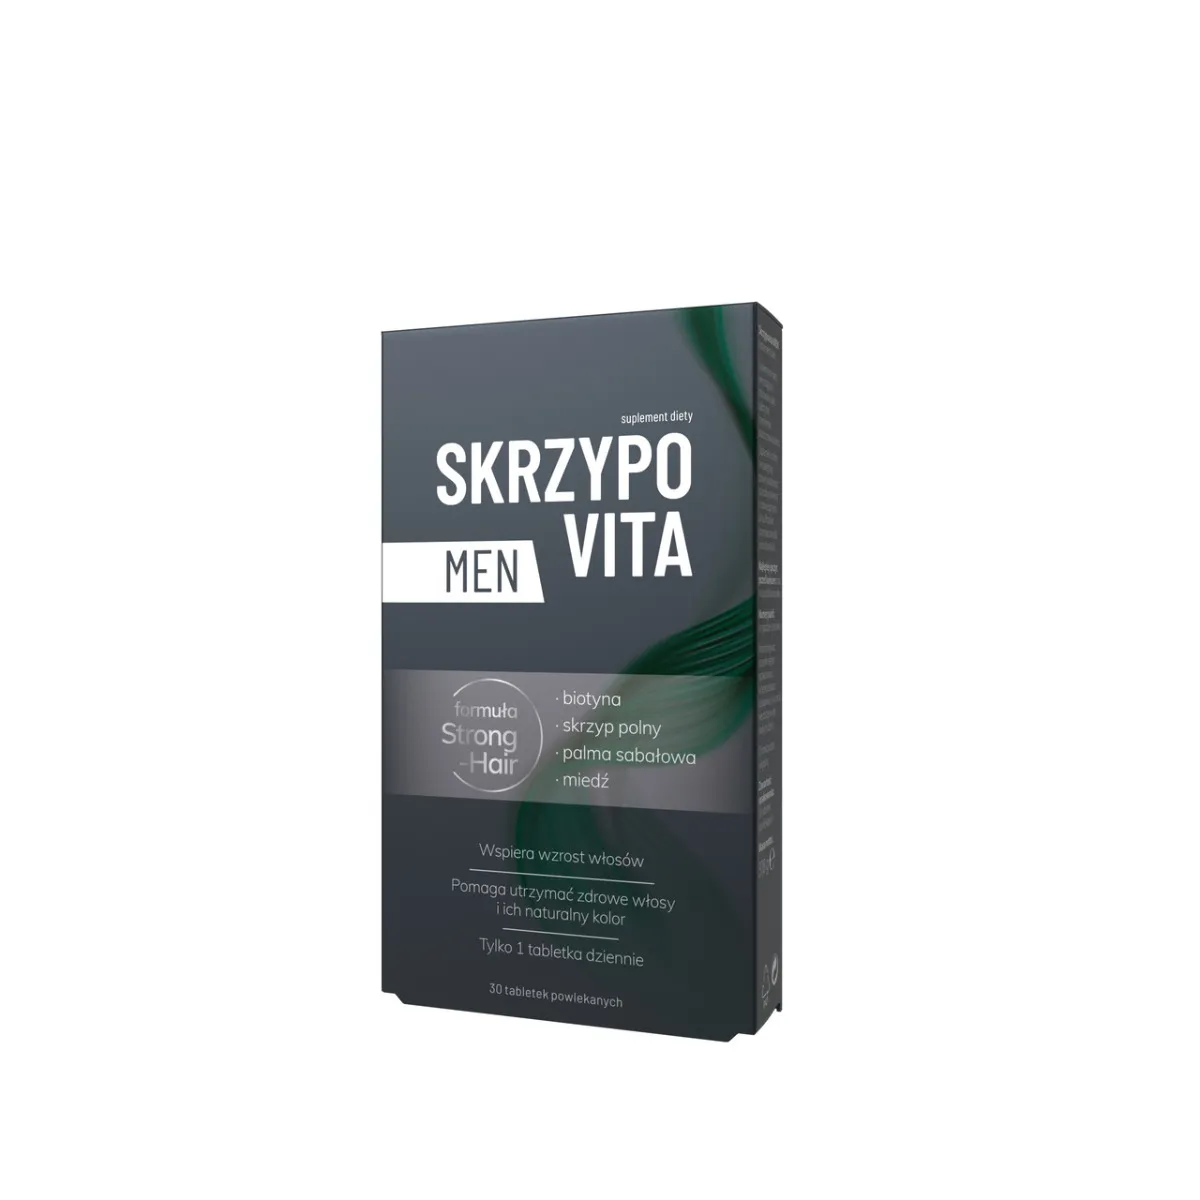 Skrzypovita Men, suplement diety, 30 tabletek